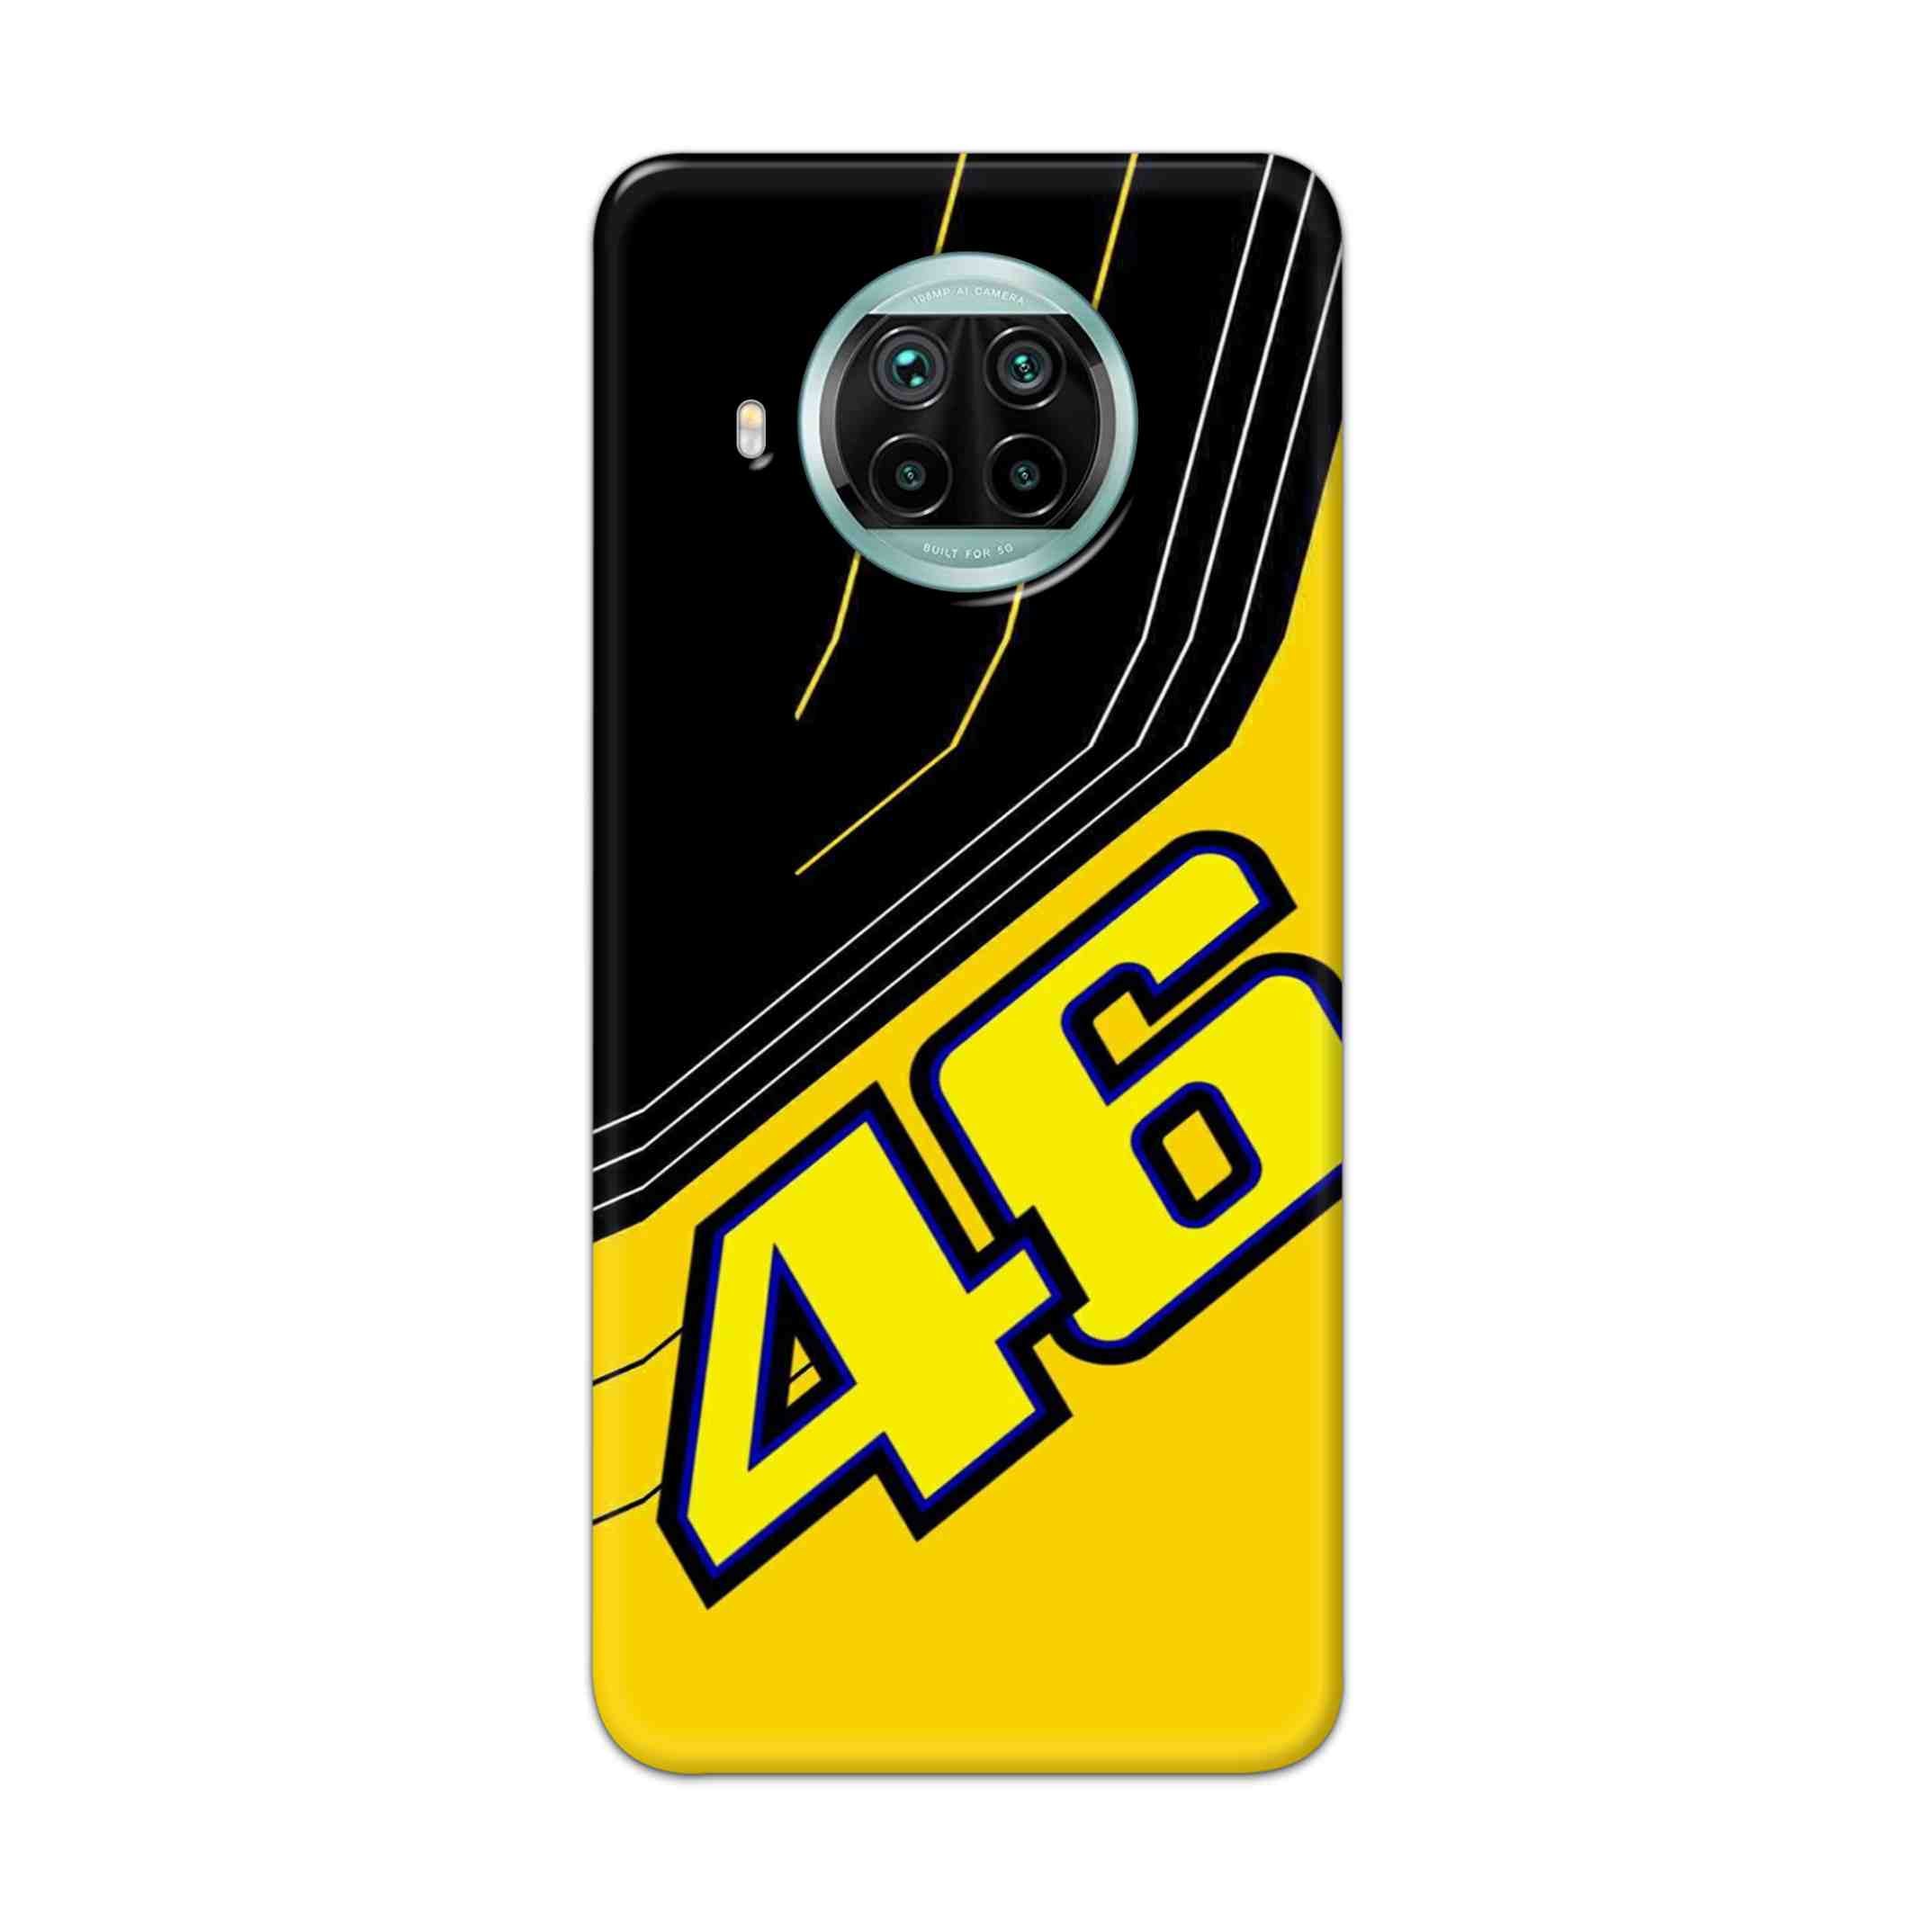 Buy 46 Hard Back Mobile Phone Case Cover For Xiaomi Mi 10i Online